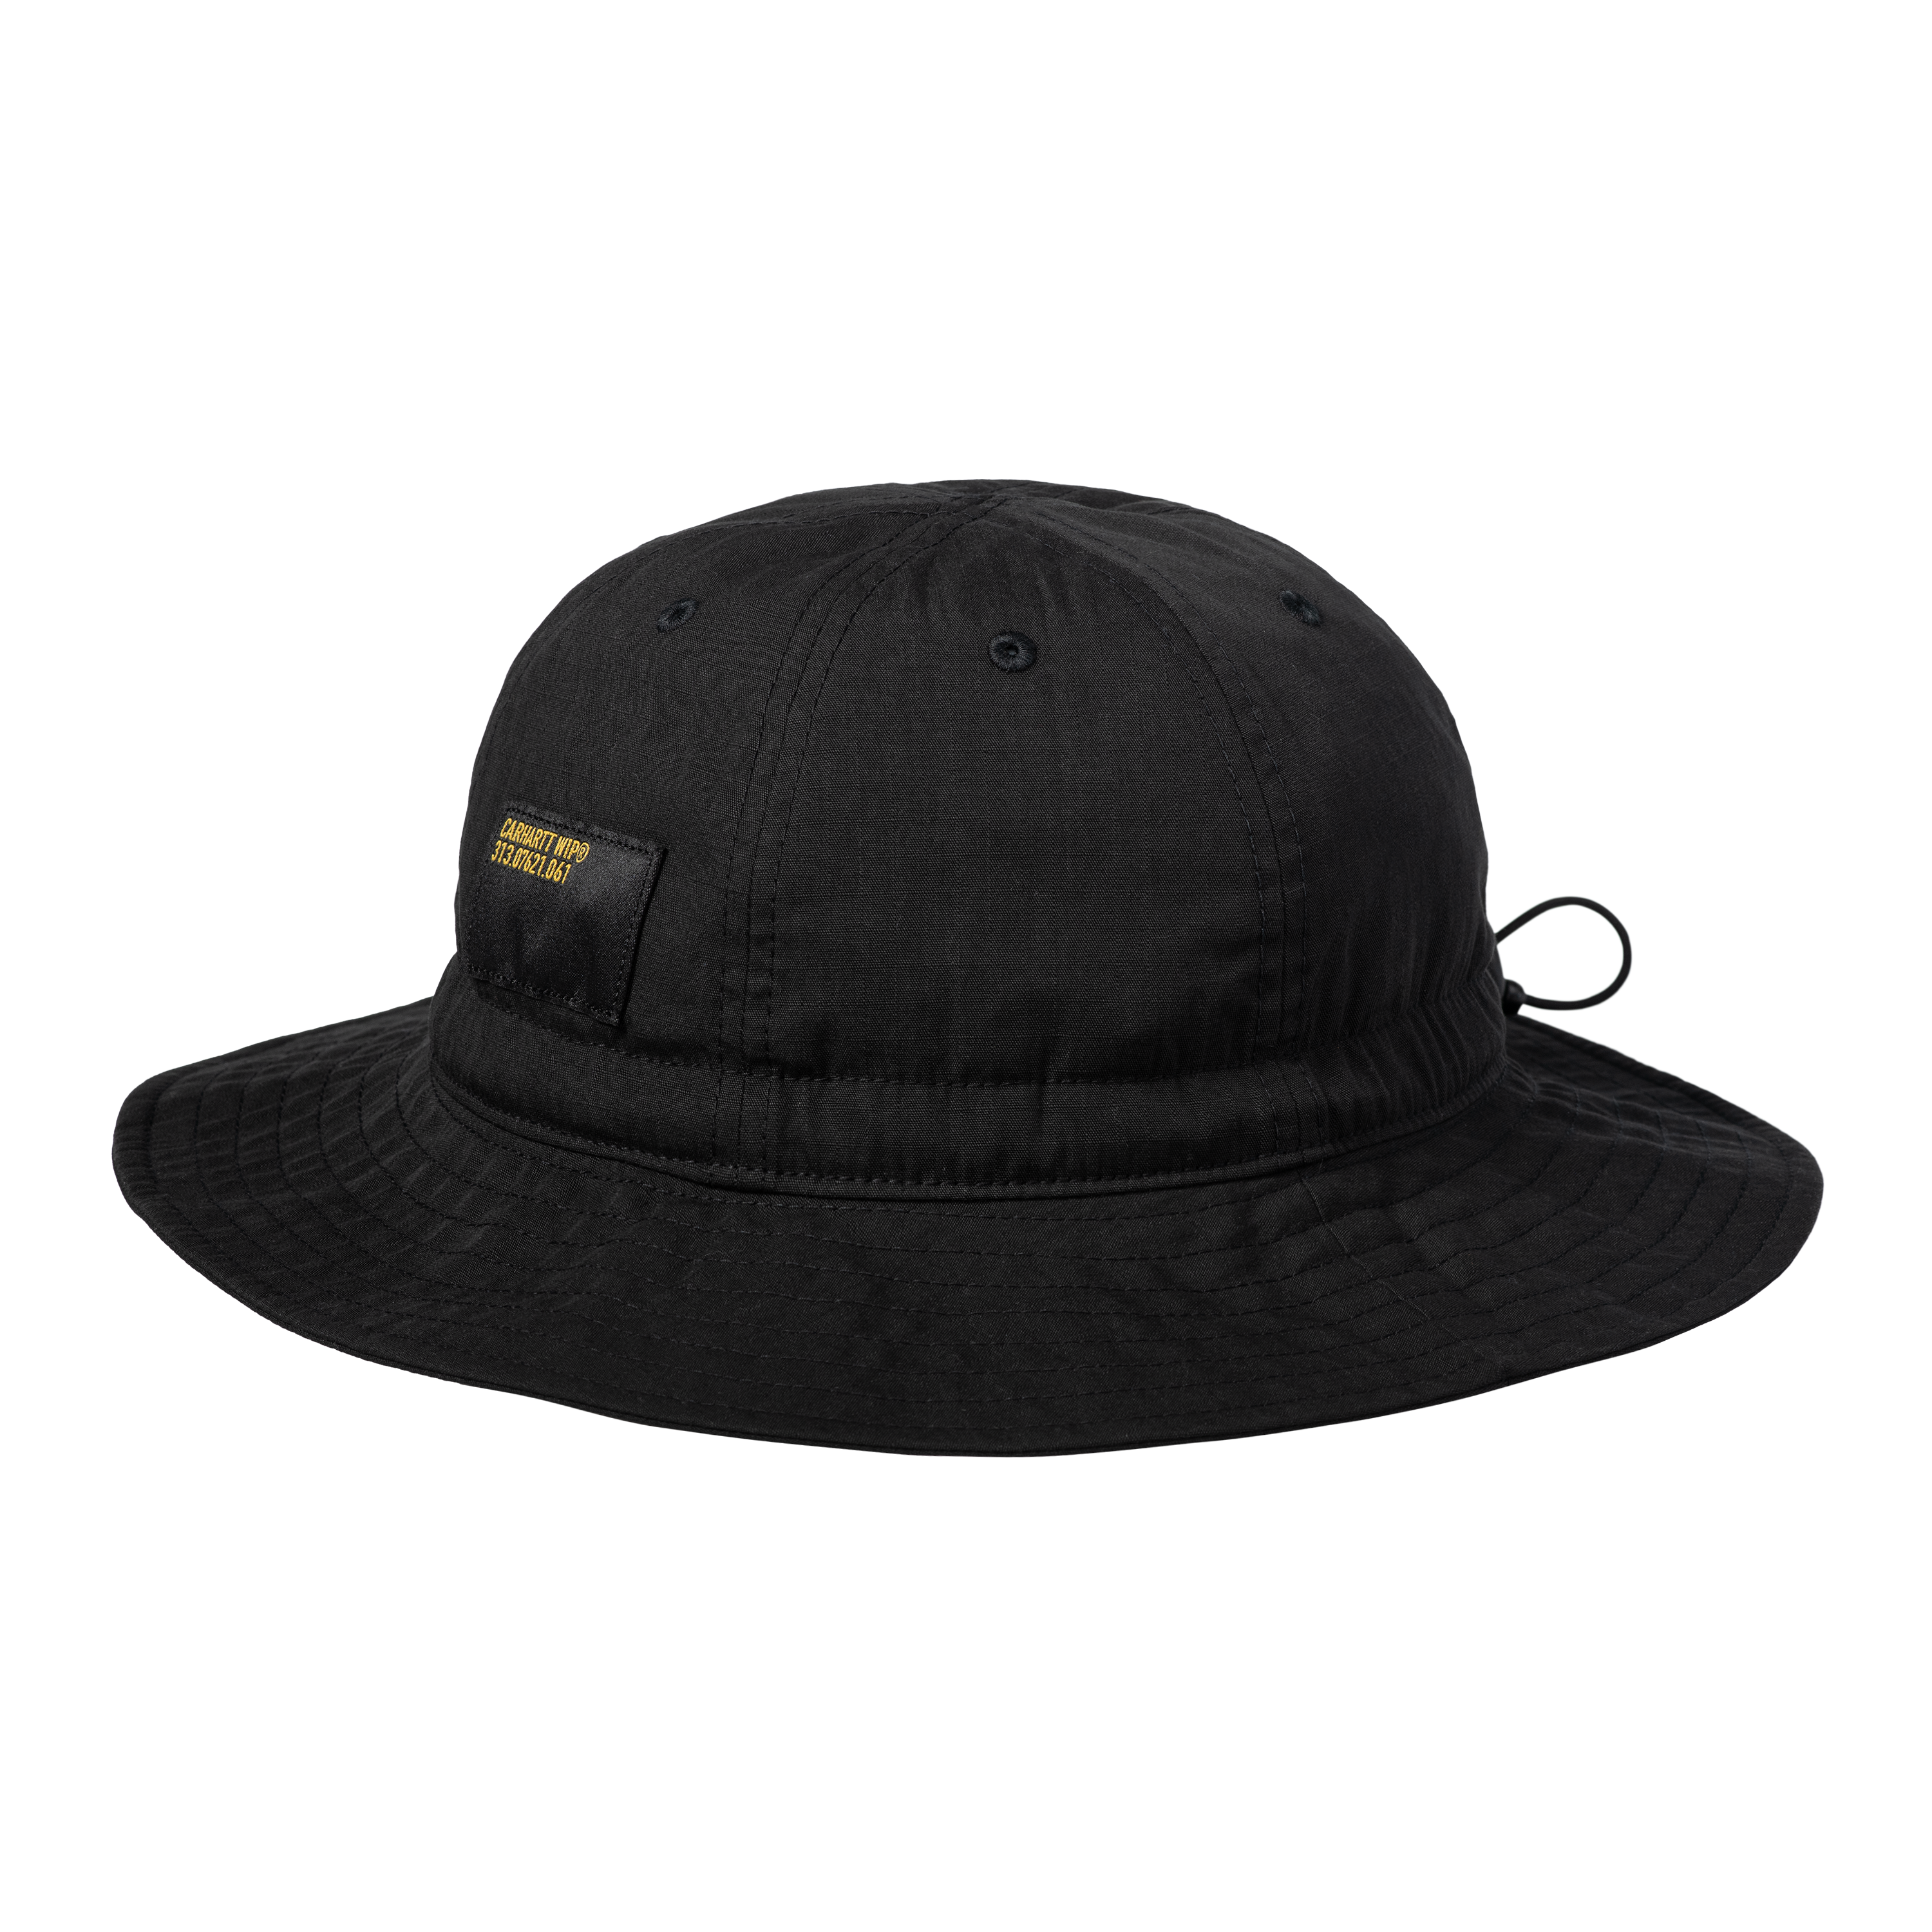 Carhartt WIP Haste Bucket Hat in Black